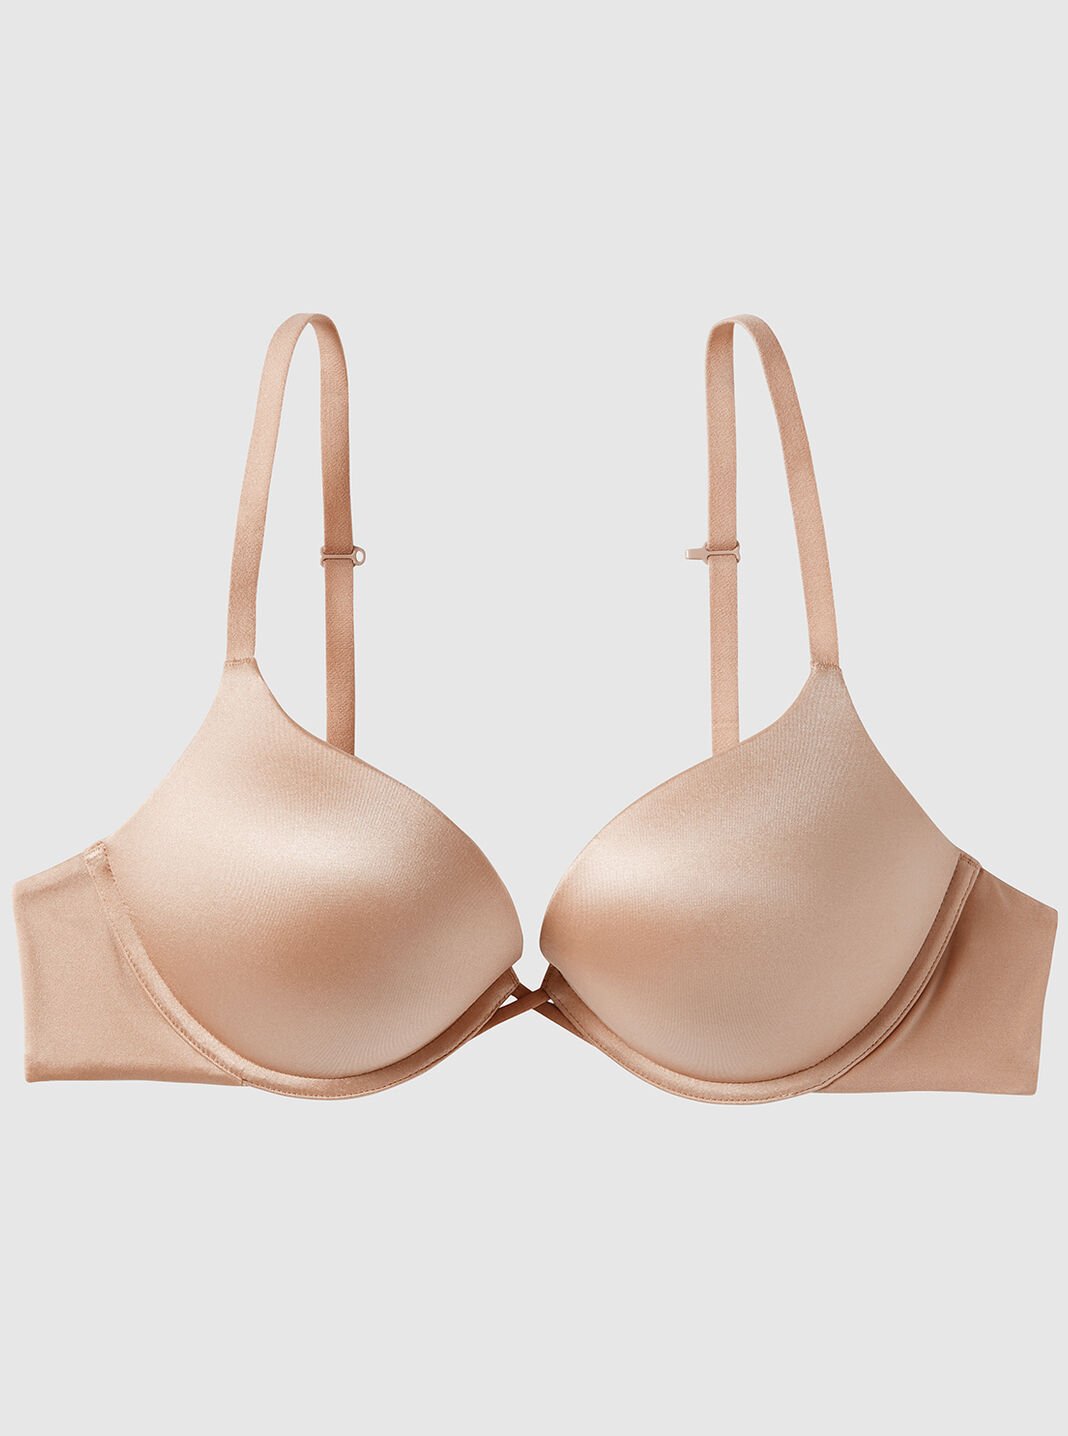 Victoria's Secret cotton Padded Bra and Panty Set Size 36C 2